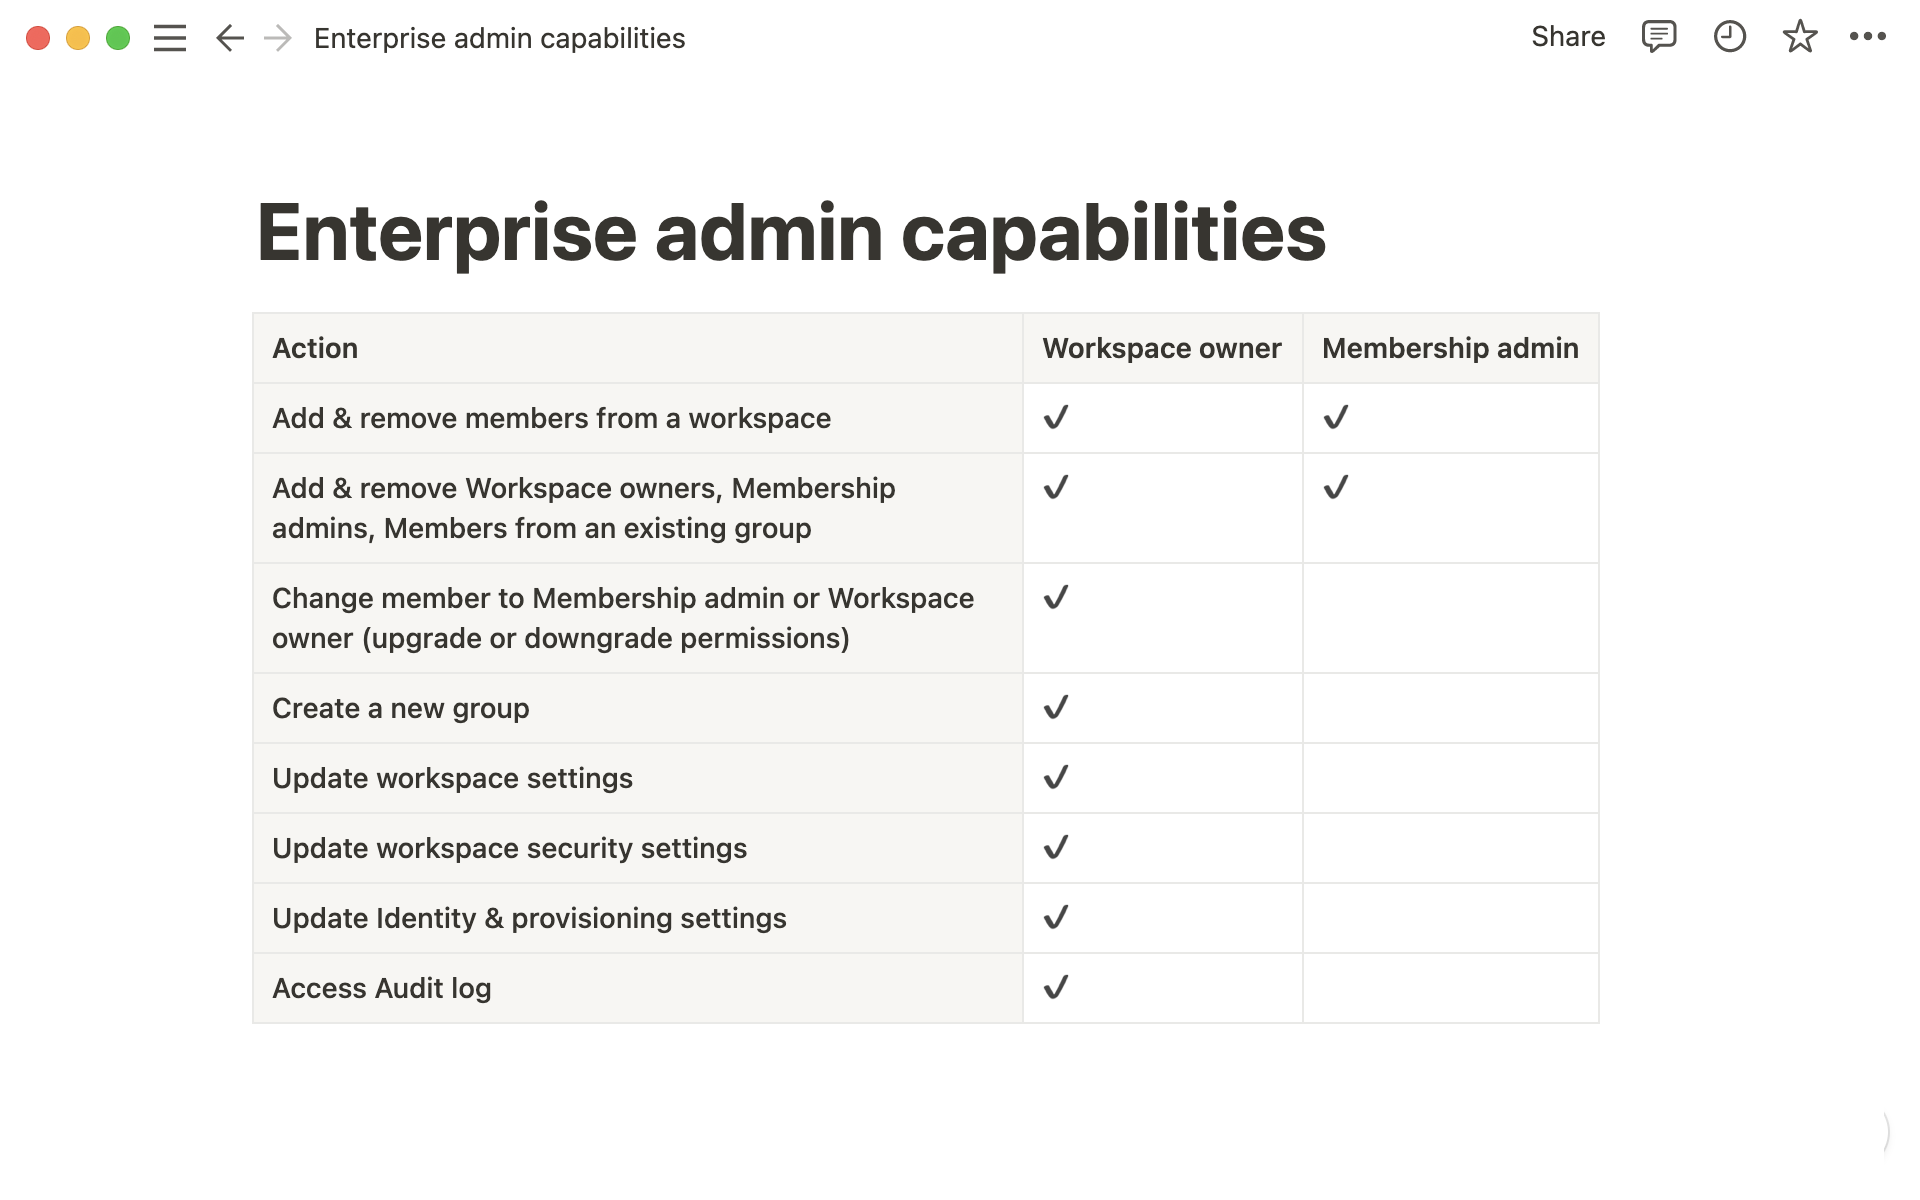 Enterprise admin capabilities